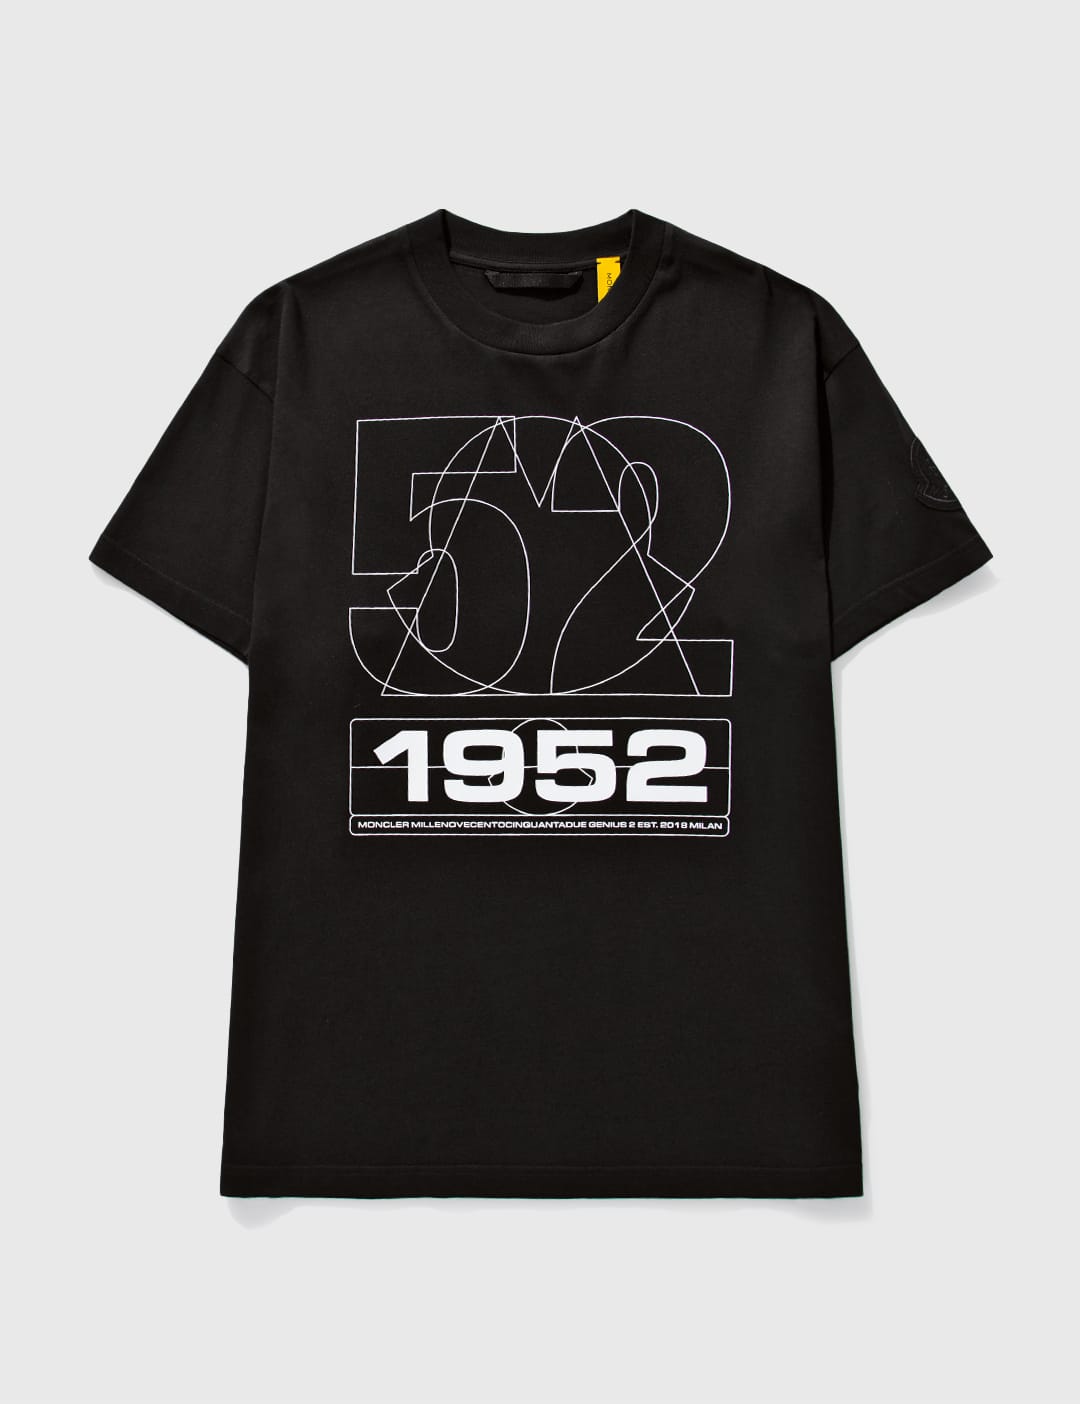 Moncler Genius 2 Moncler 1952 T-shirt